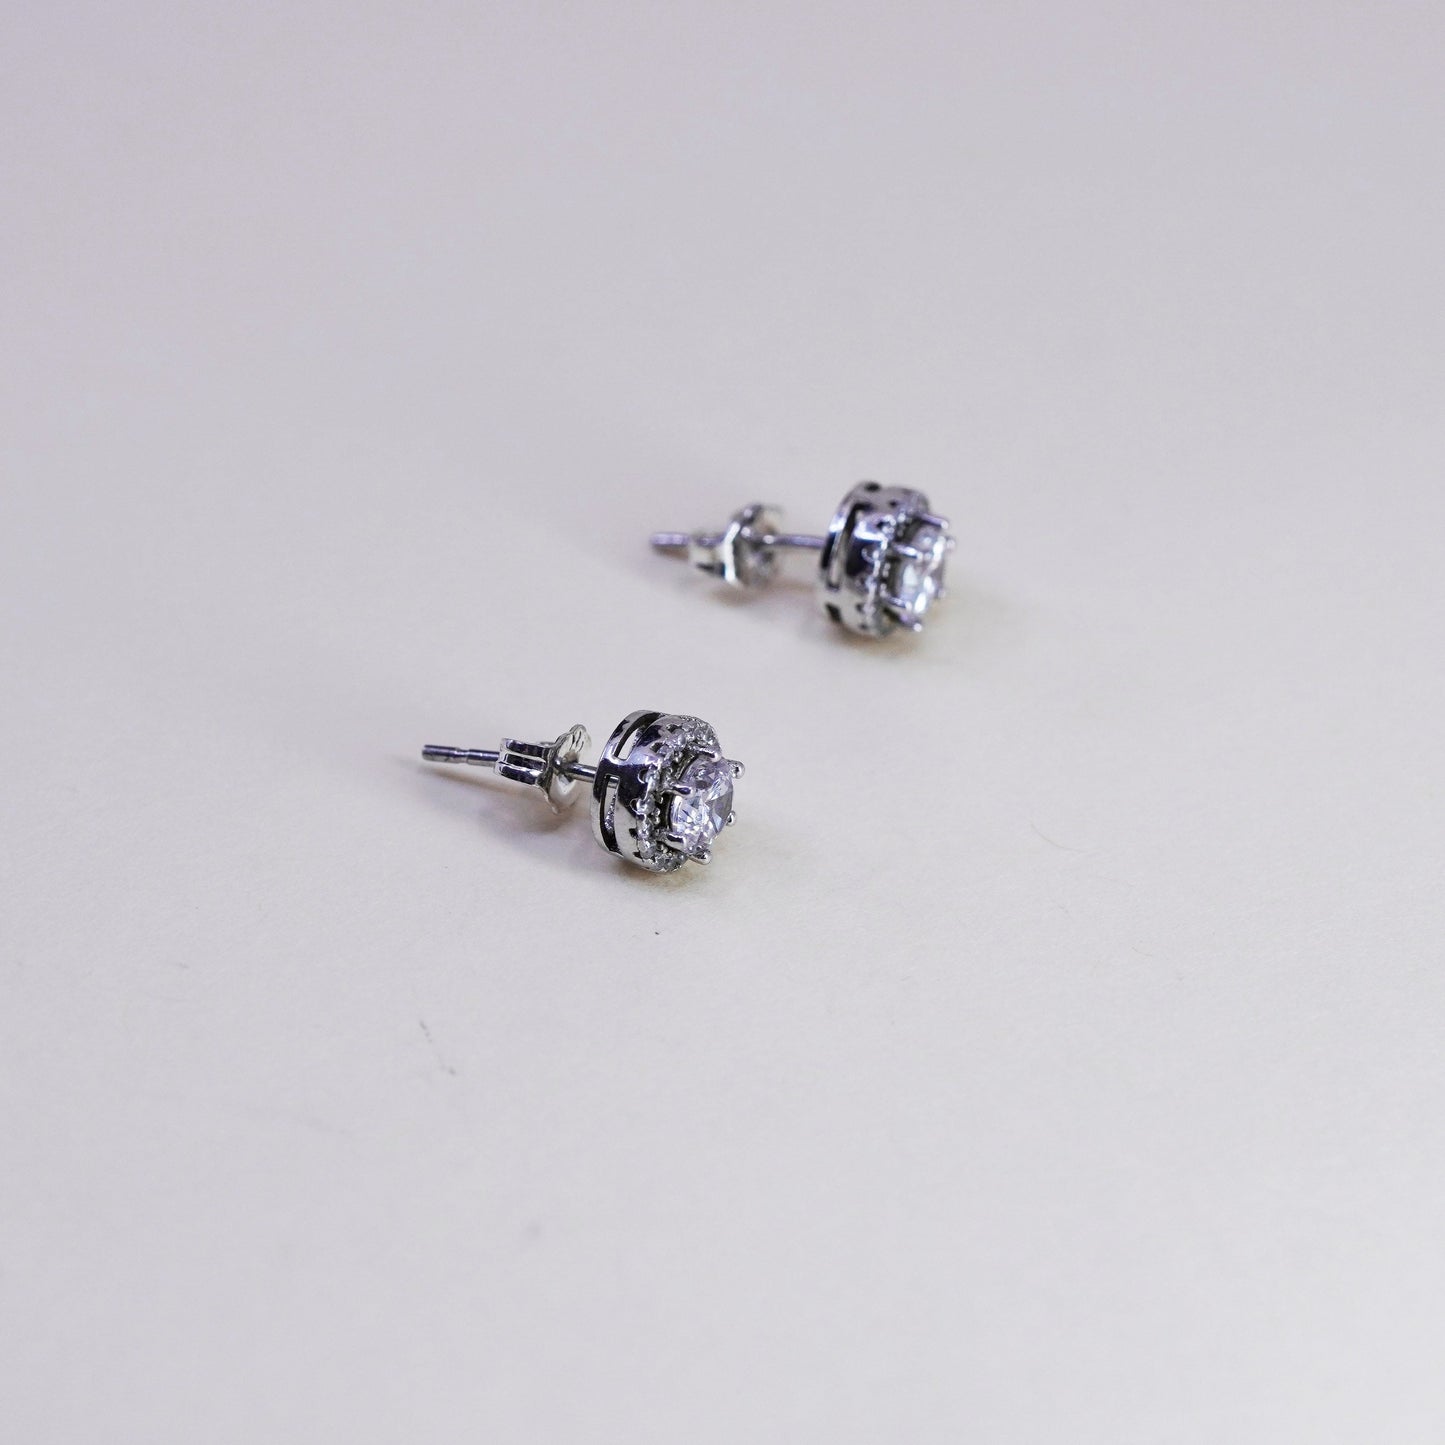 8mm, Vintage sterling silver genuine cz studs, fashion minimalist earrings